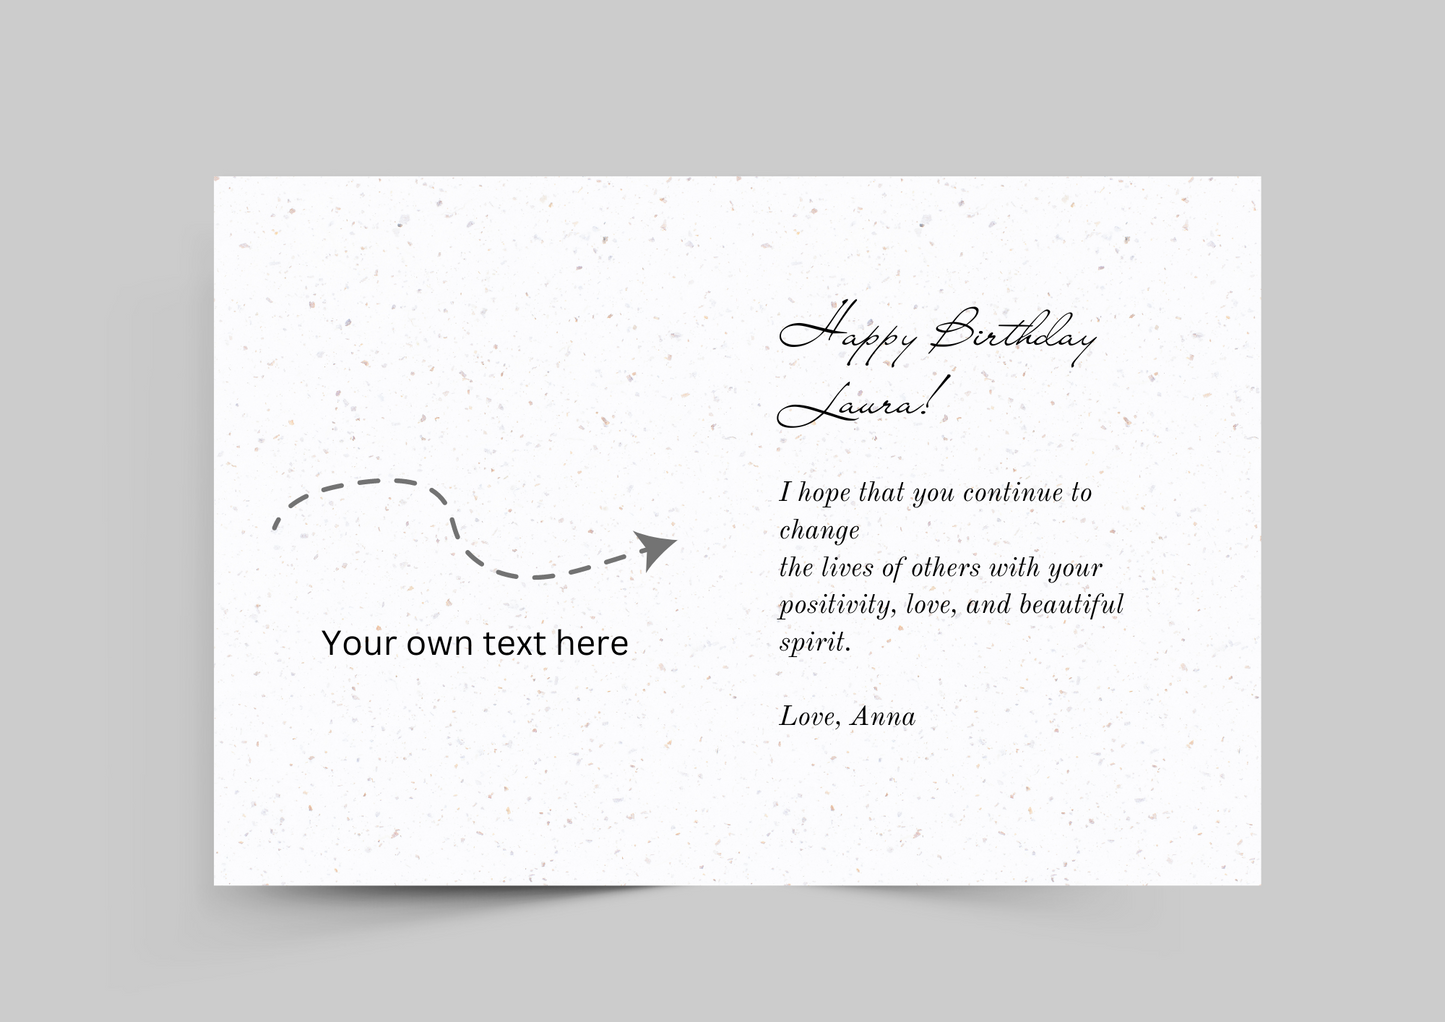 Sending Hugs 1  - Personalized Seed Paper Greeting Card